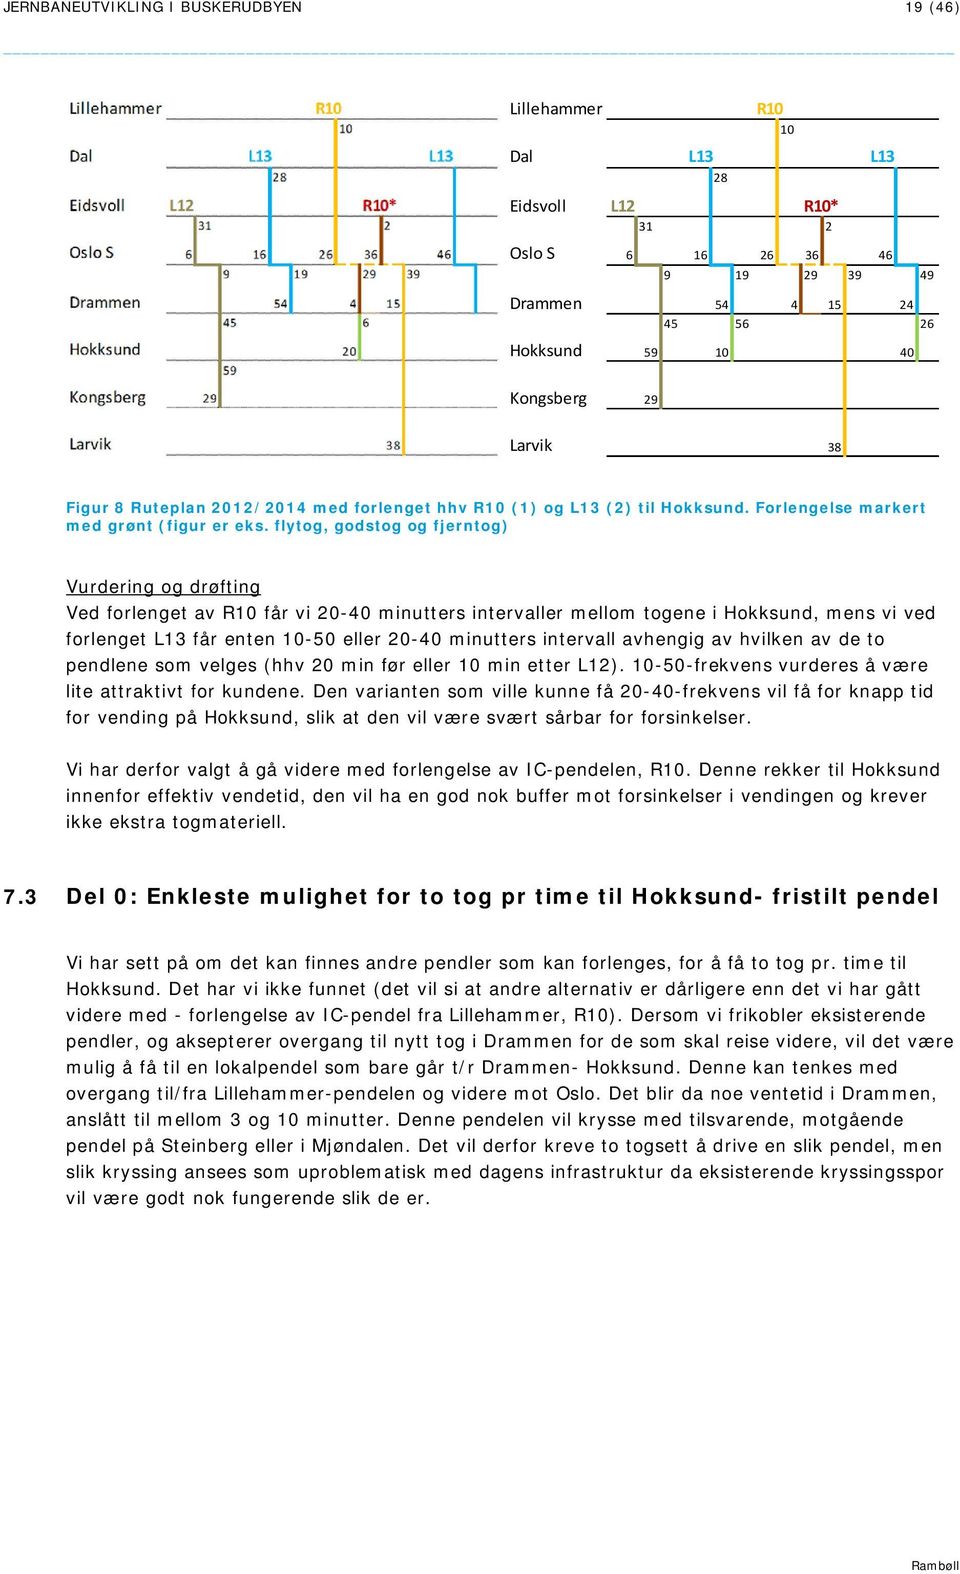 flytog, godstog og fjerntog) Vurdering og drøfting Ved forlenget av R10 får vi 20-40 minutters intervaller mellom togene i Hokksund, mens vi ved forlenget L13 får enten 10-50 eller 20-40 minutters